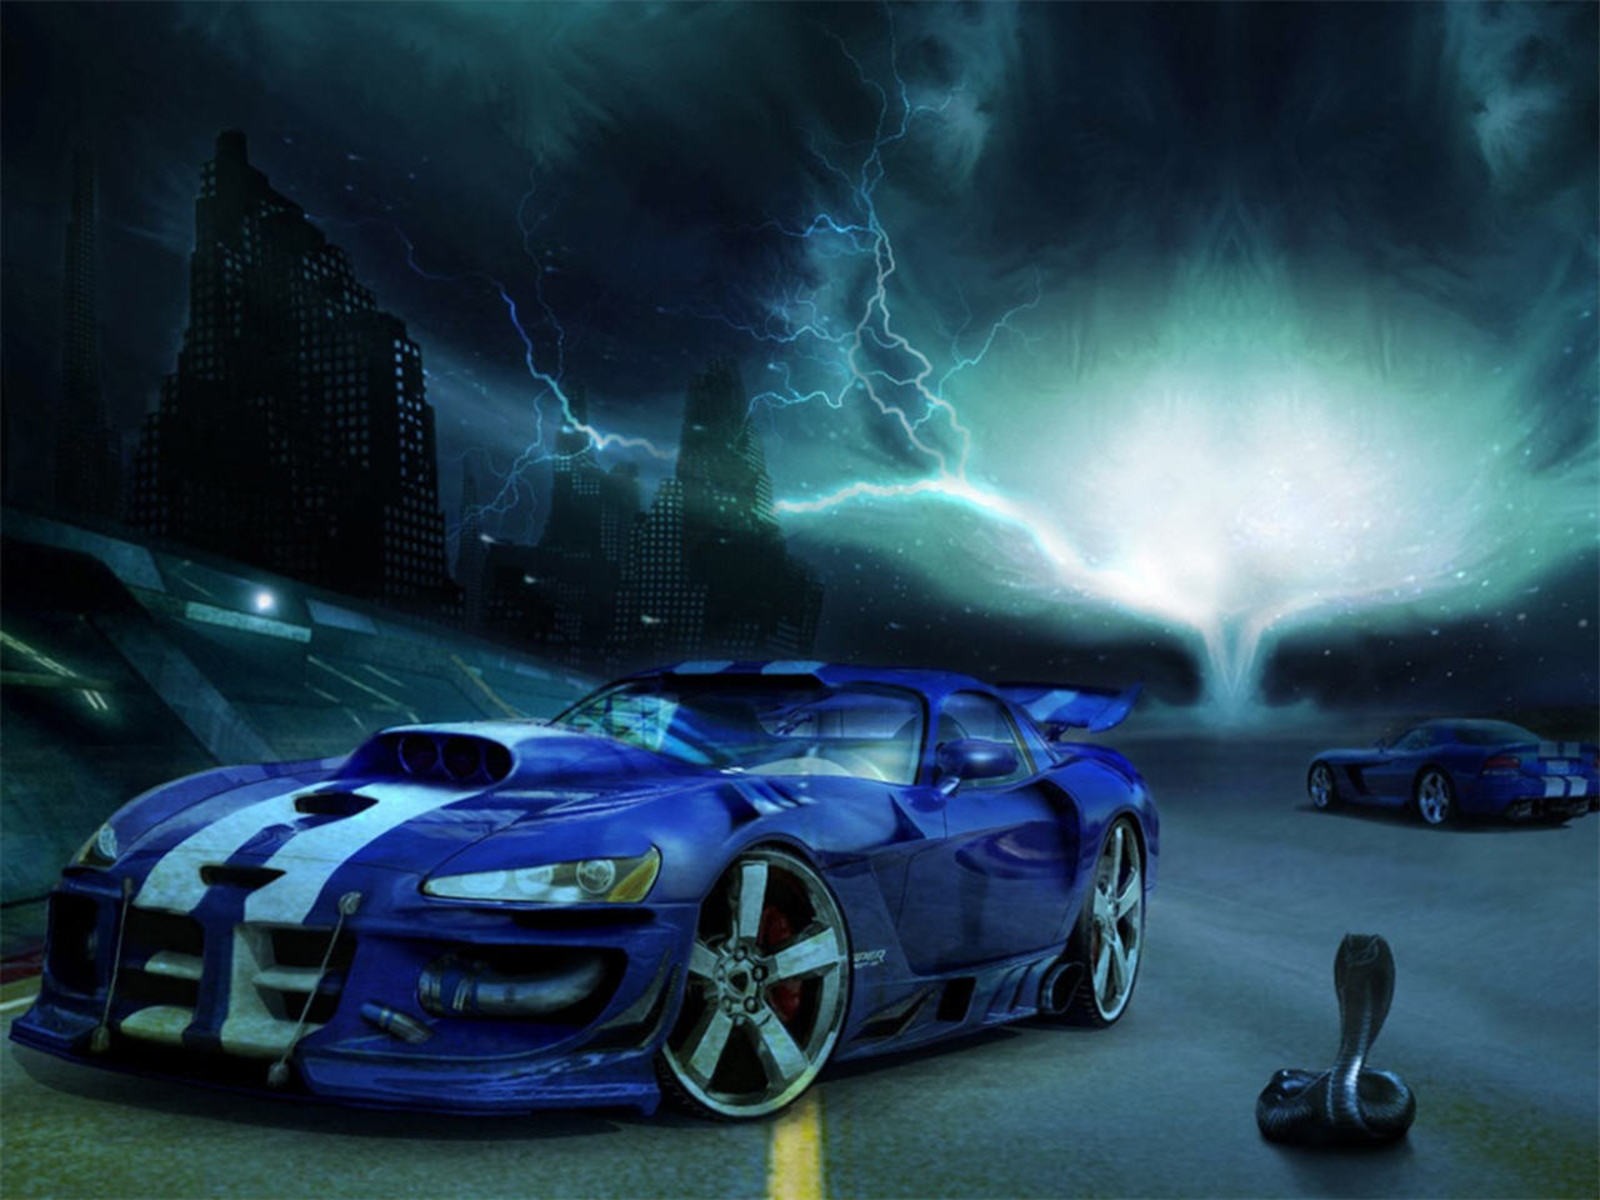 Blue Dodge Viper Wallpaper HD In Cars Imageci